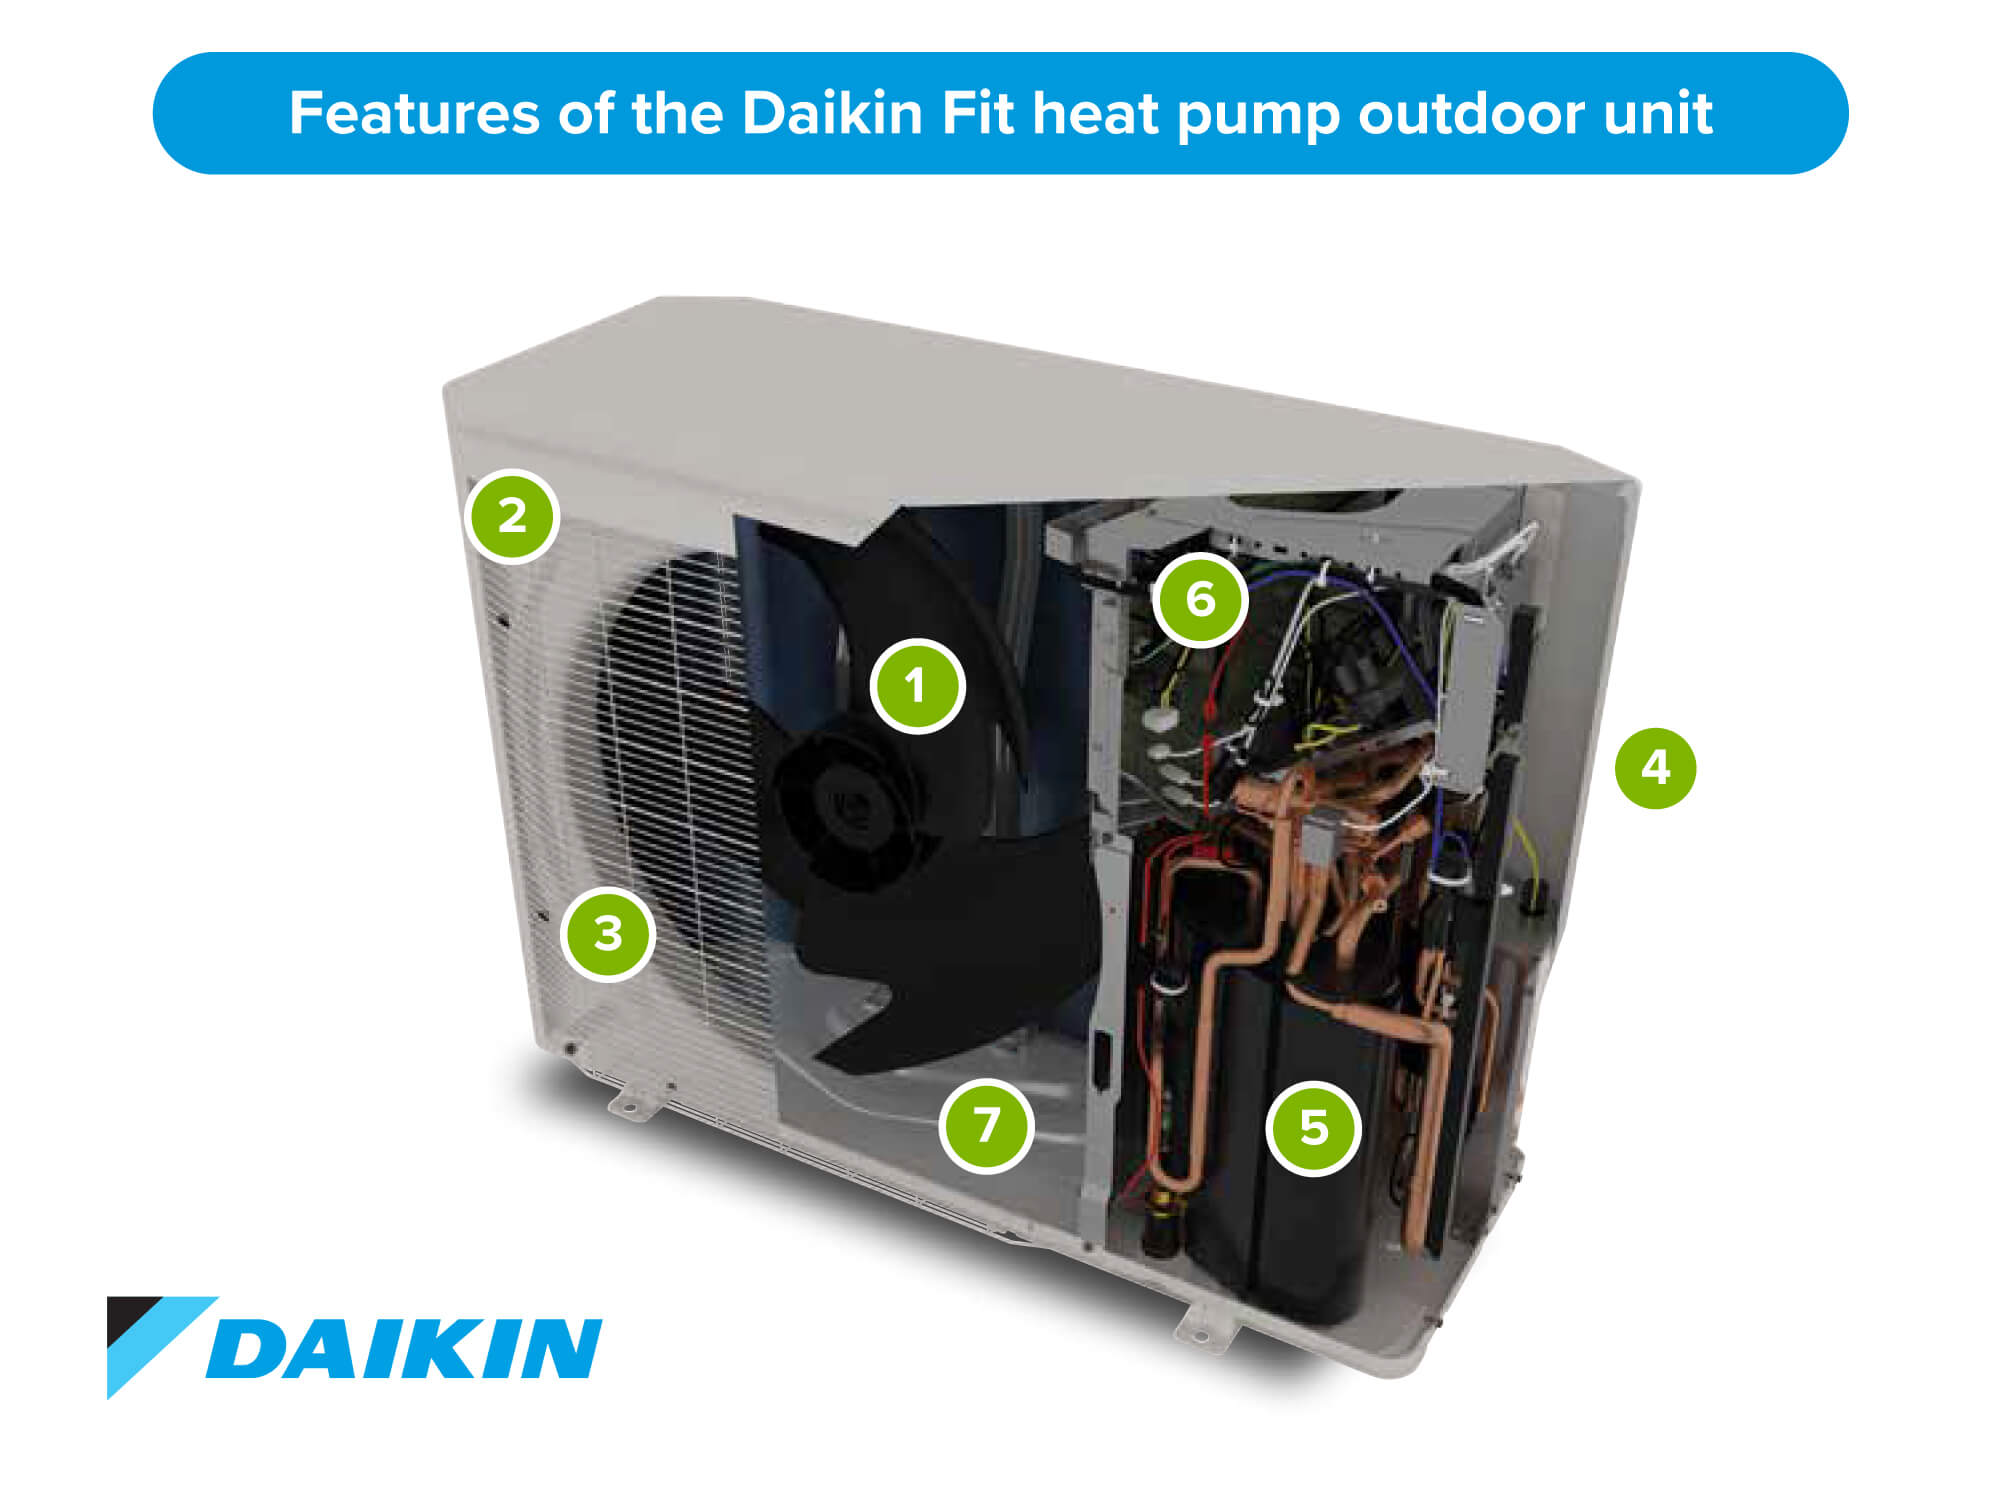 Daikin Fit heat pump features